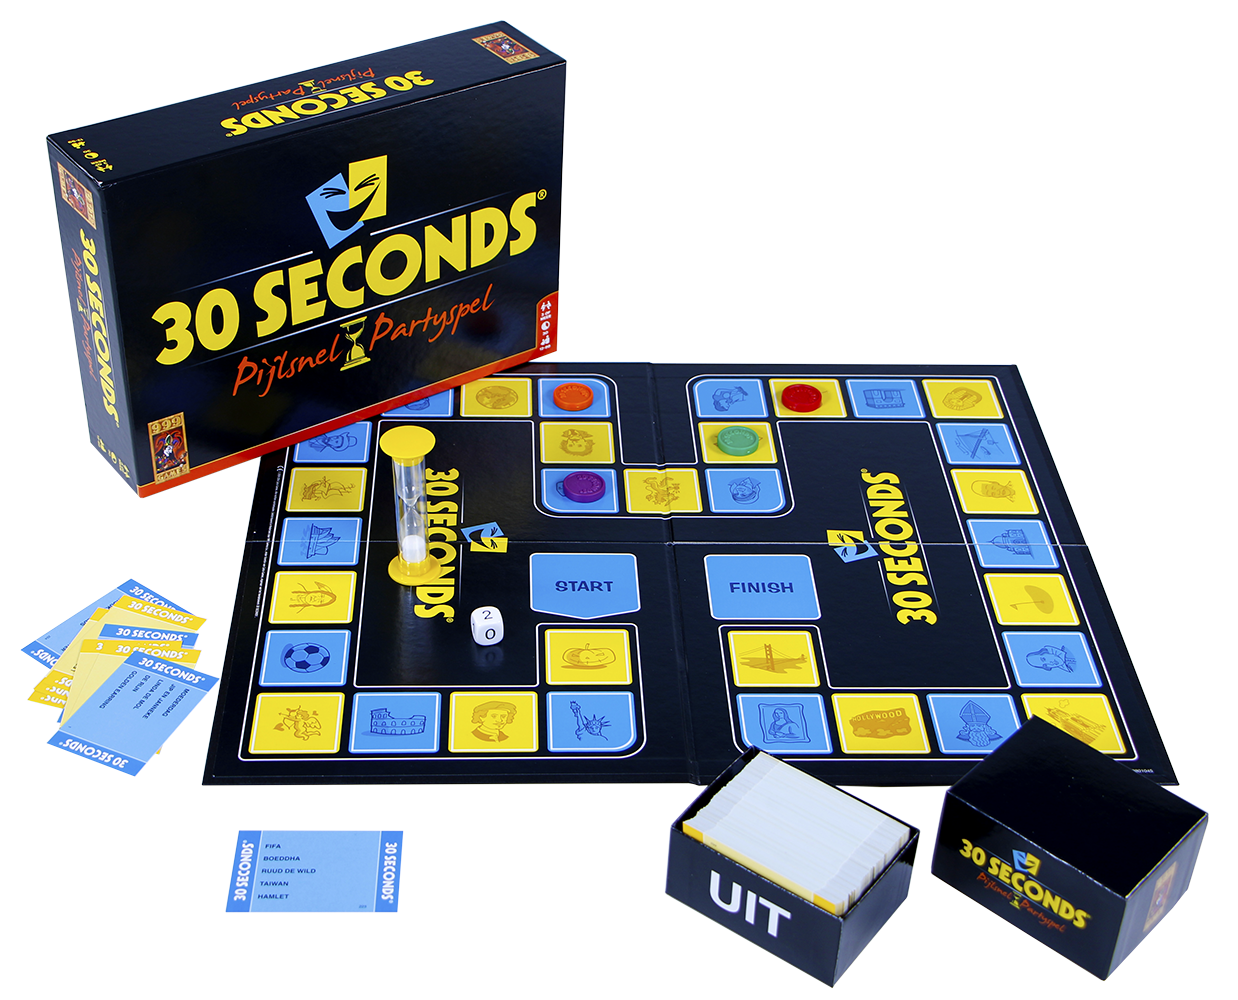 30 Seconds NL (herziene versie)